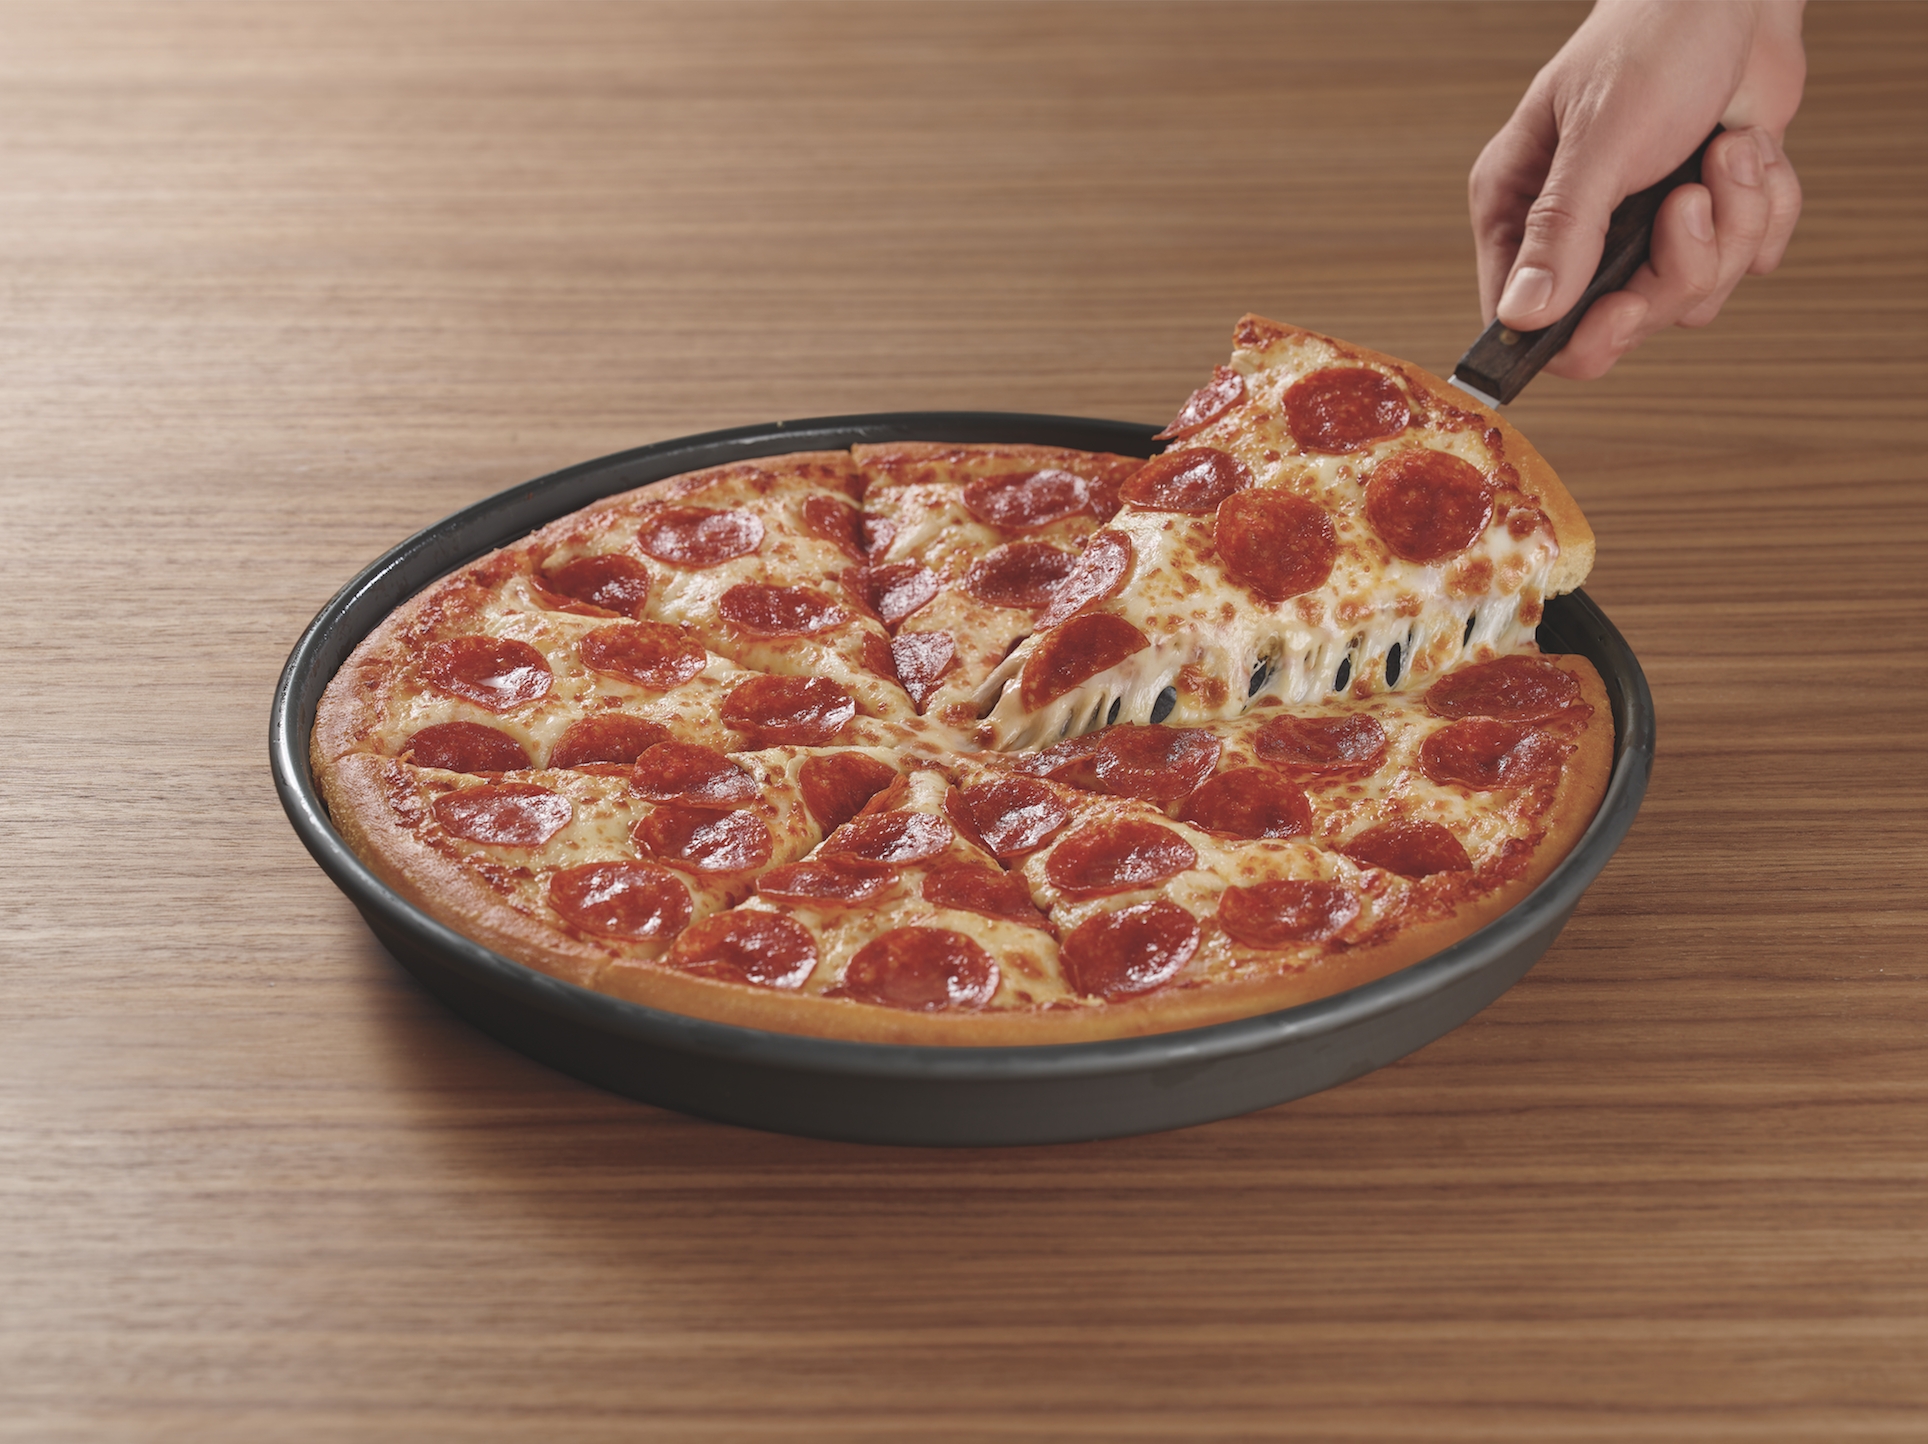 Теста пицца отзывы. Pizza Hut пепперони. Chopard pizza пепперони. Пицца необычной формы.